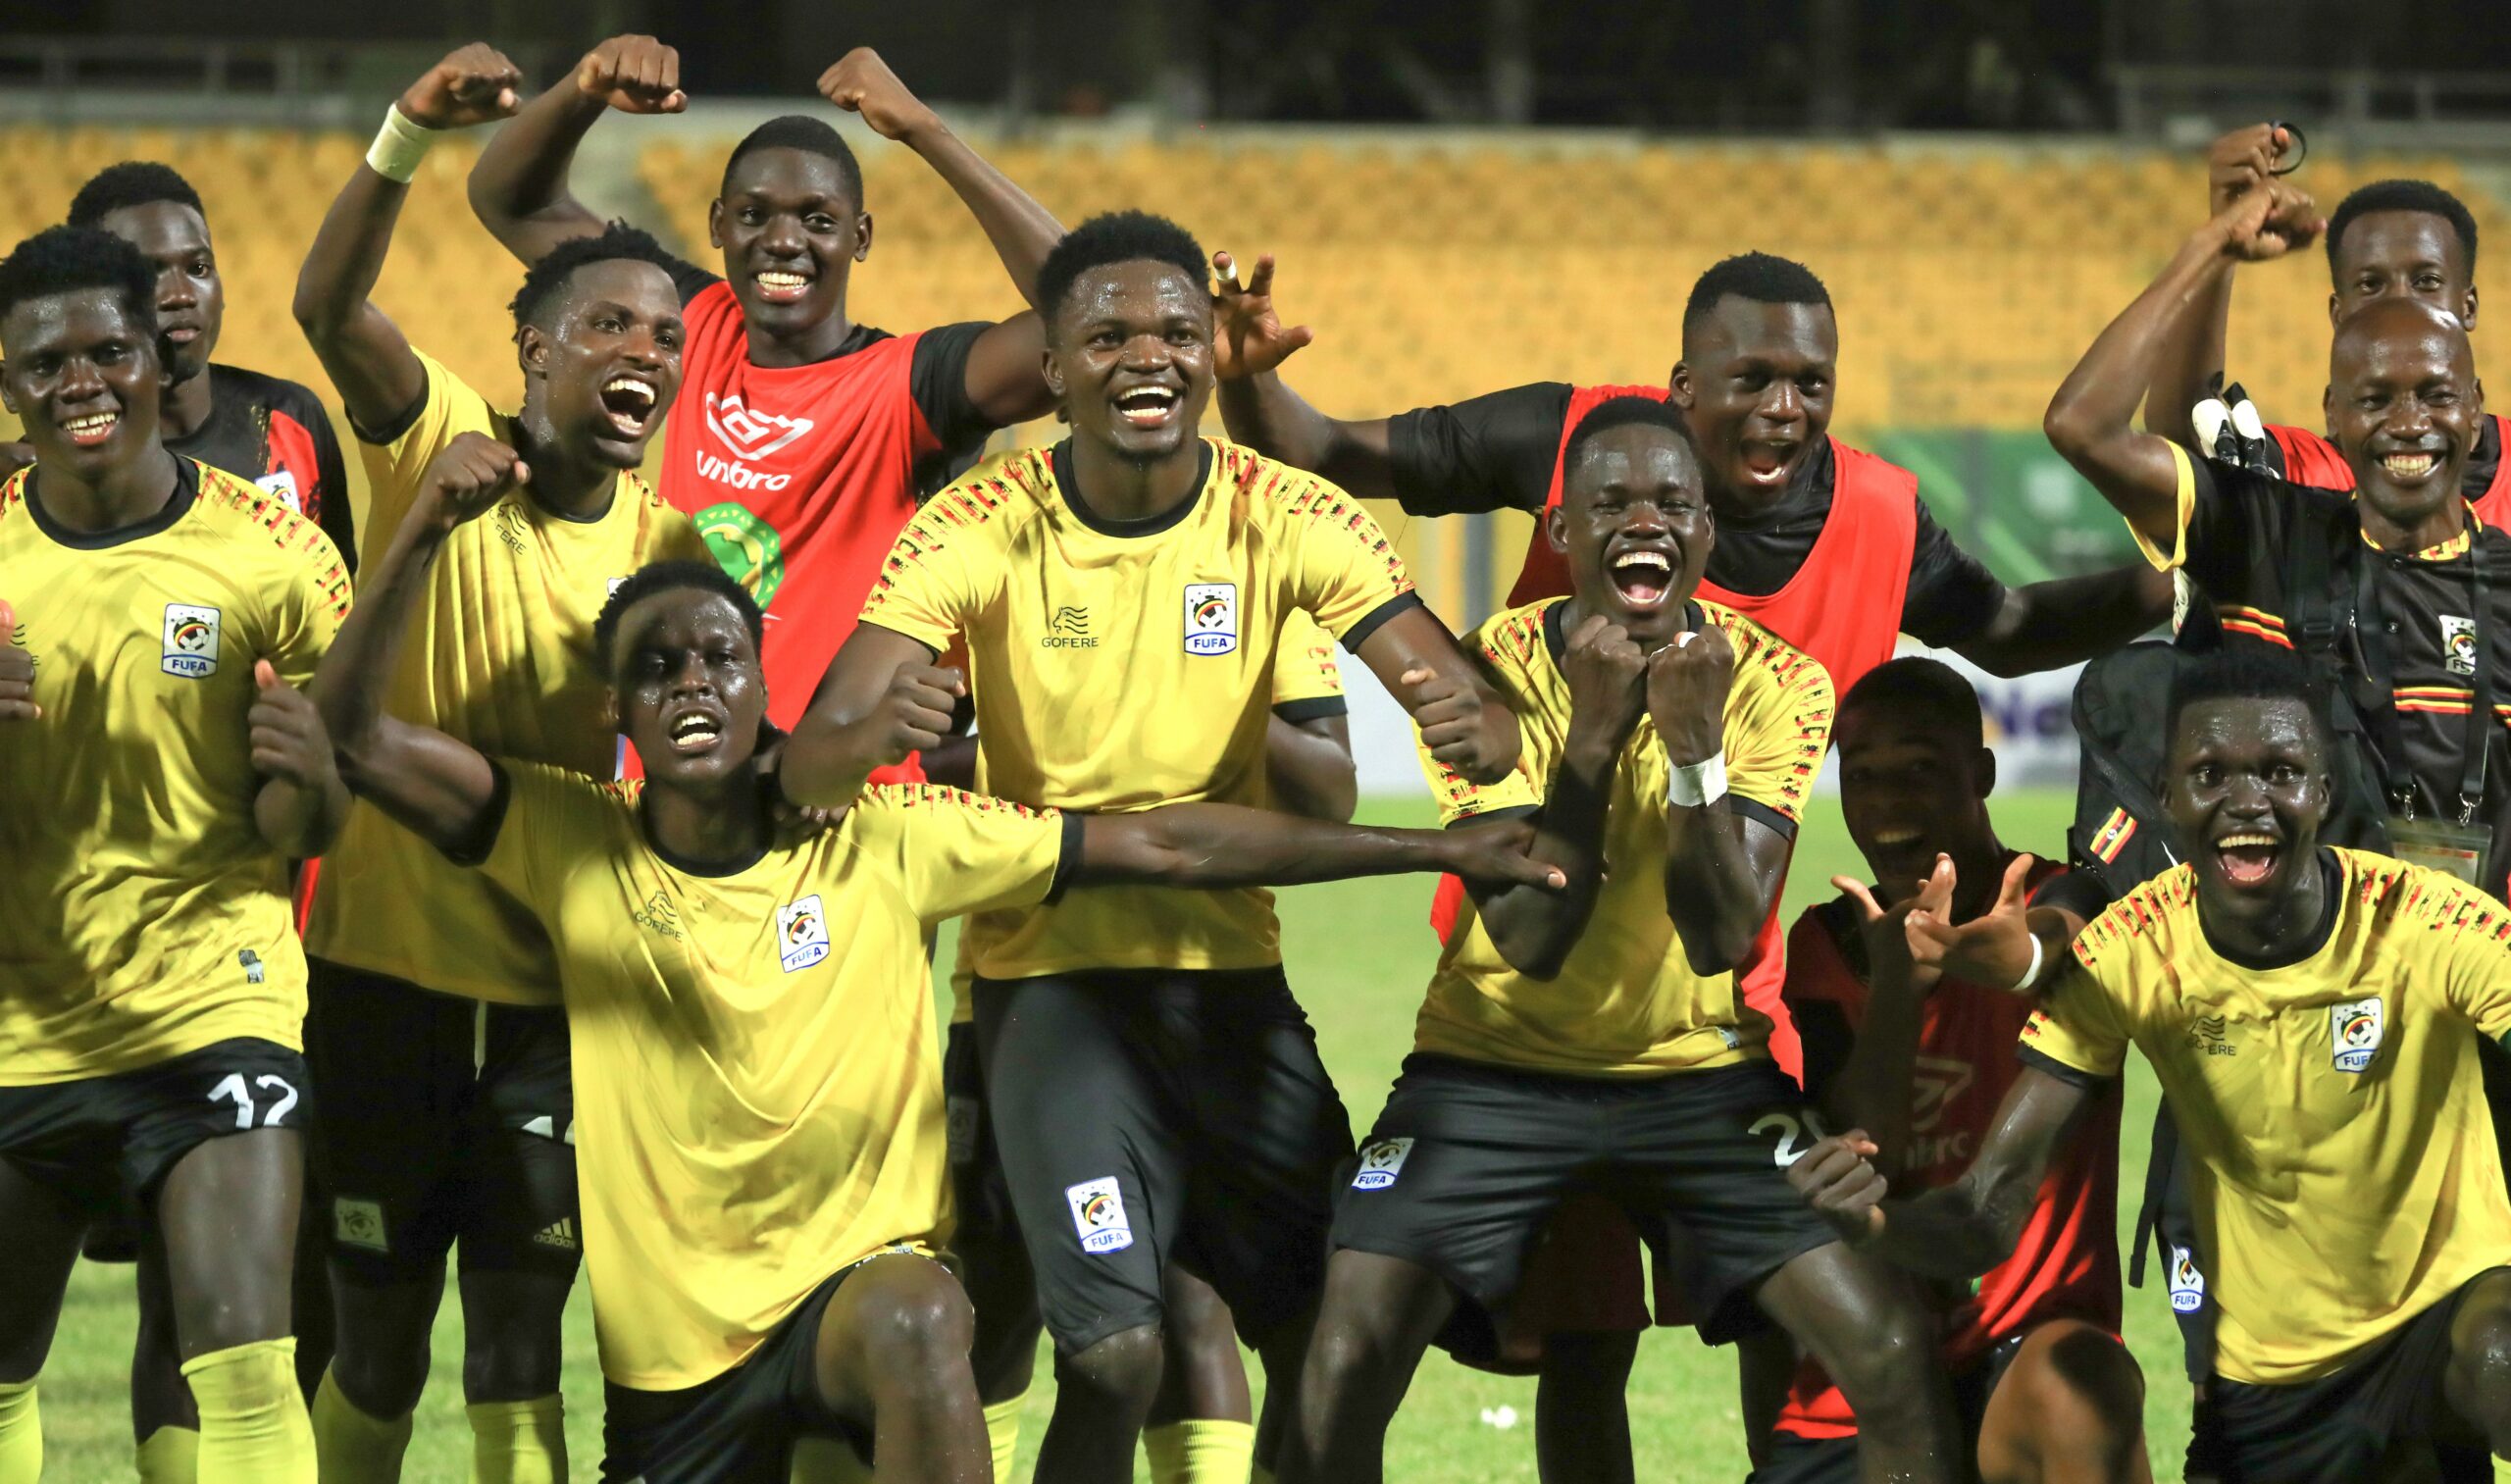 2023 African Games: Uganda surprises Senegal with upset victory to book semifinal spot